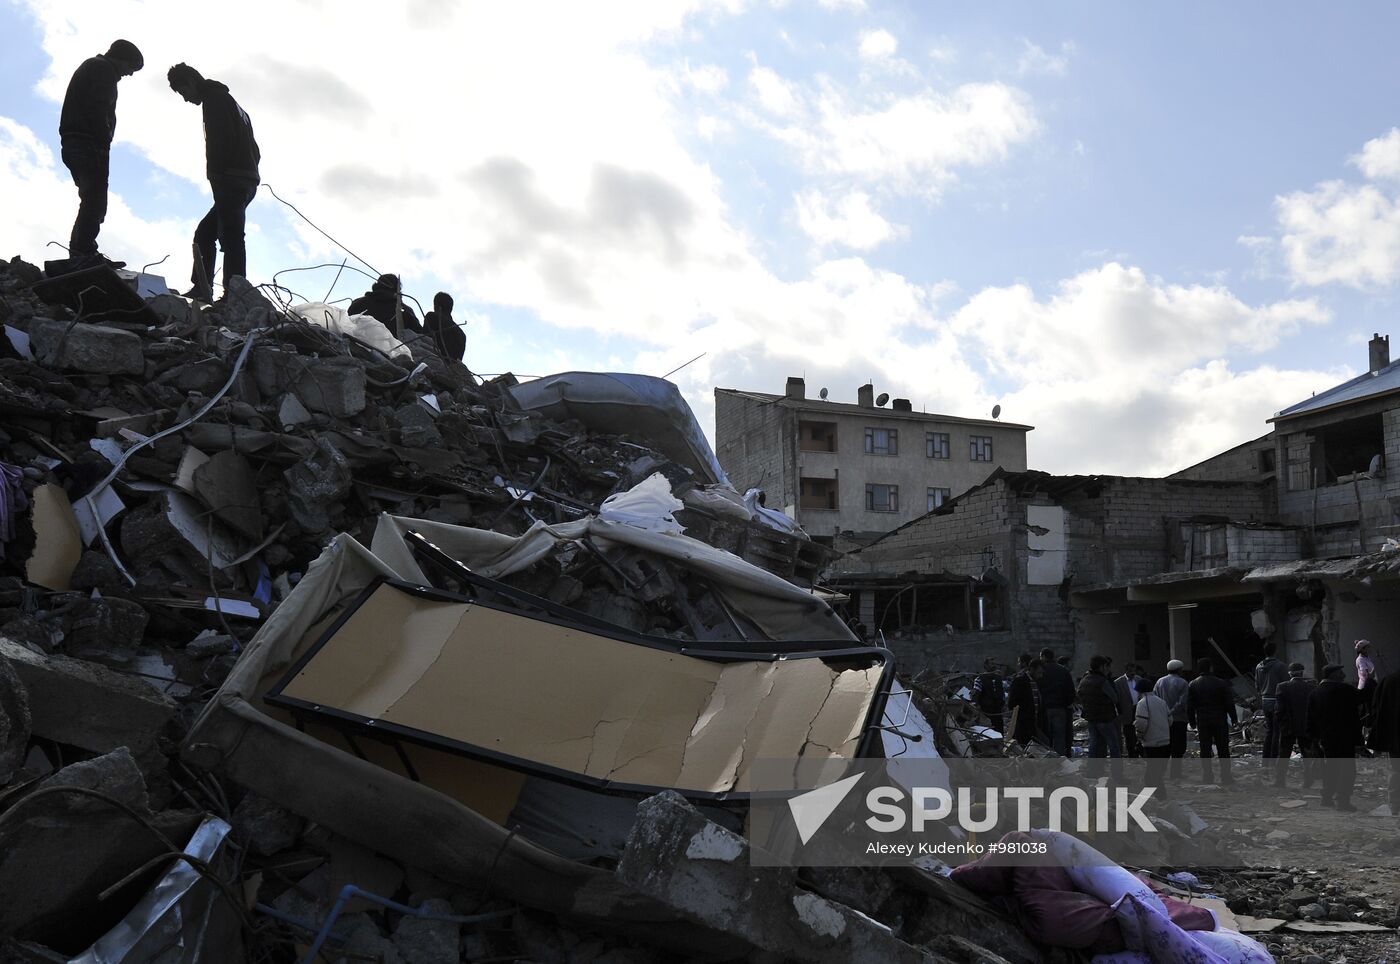 Earthquake aftermath in Turkey